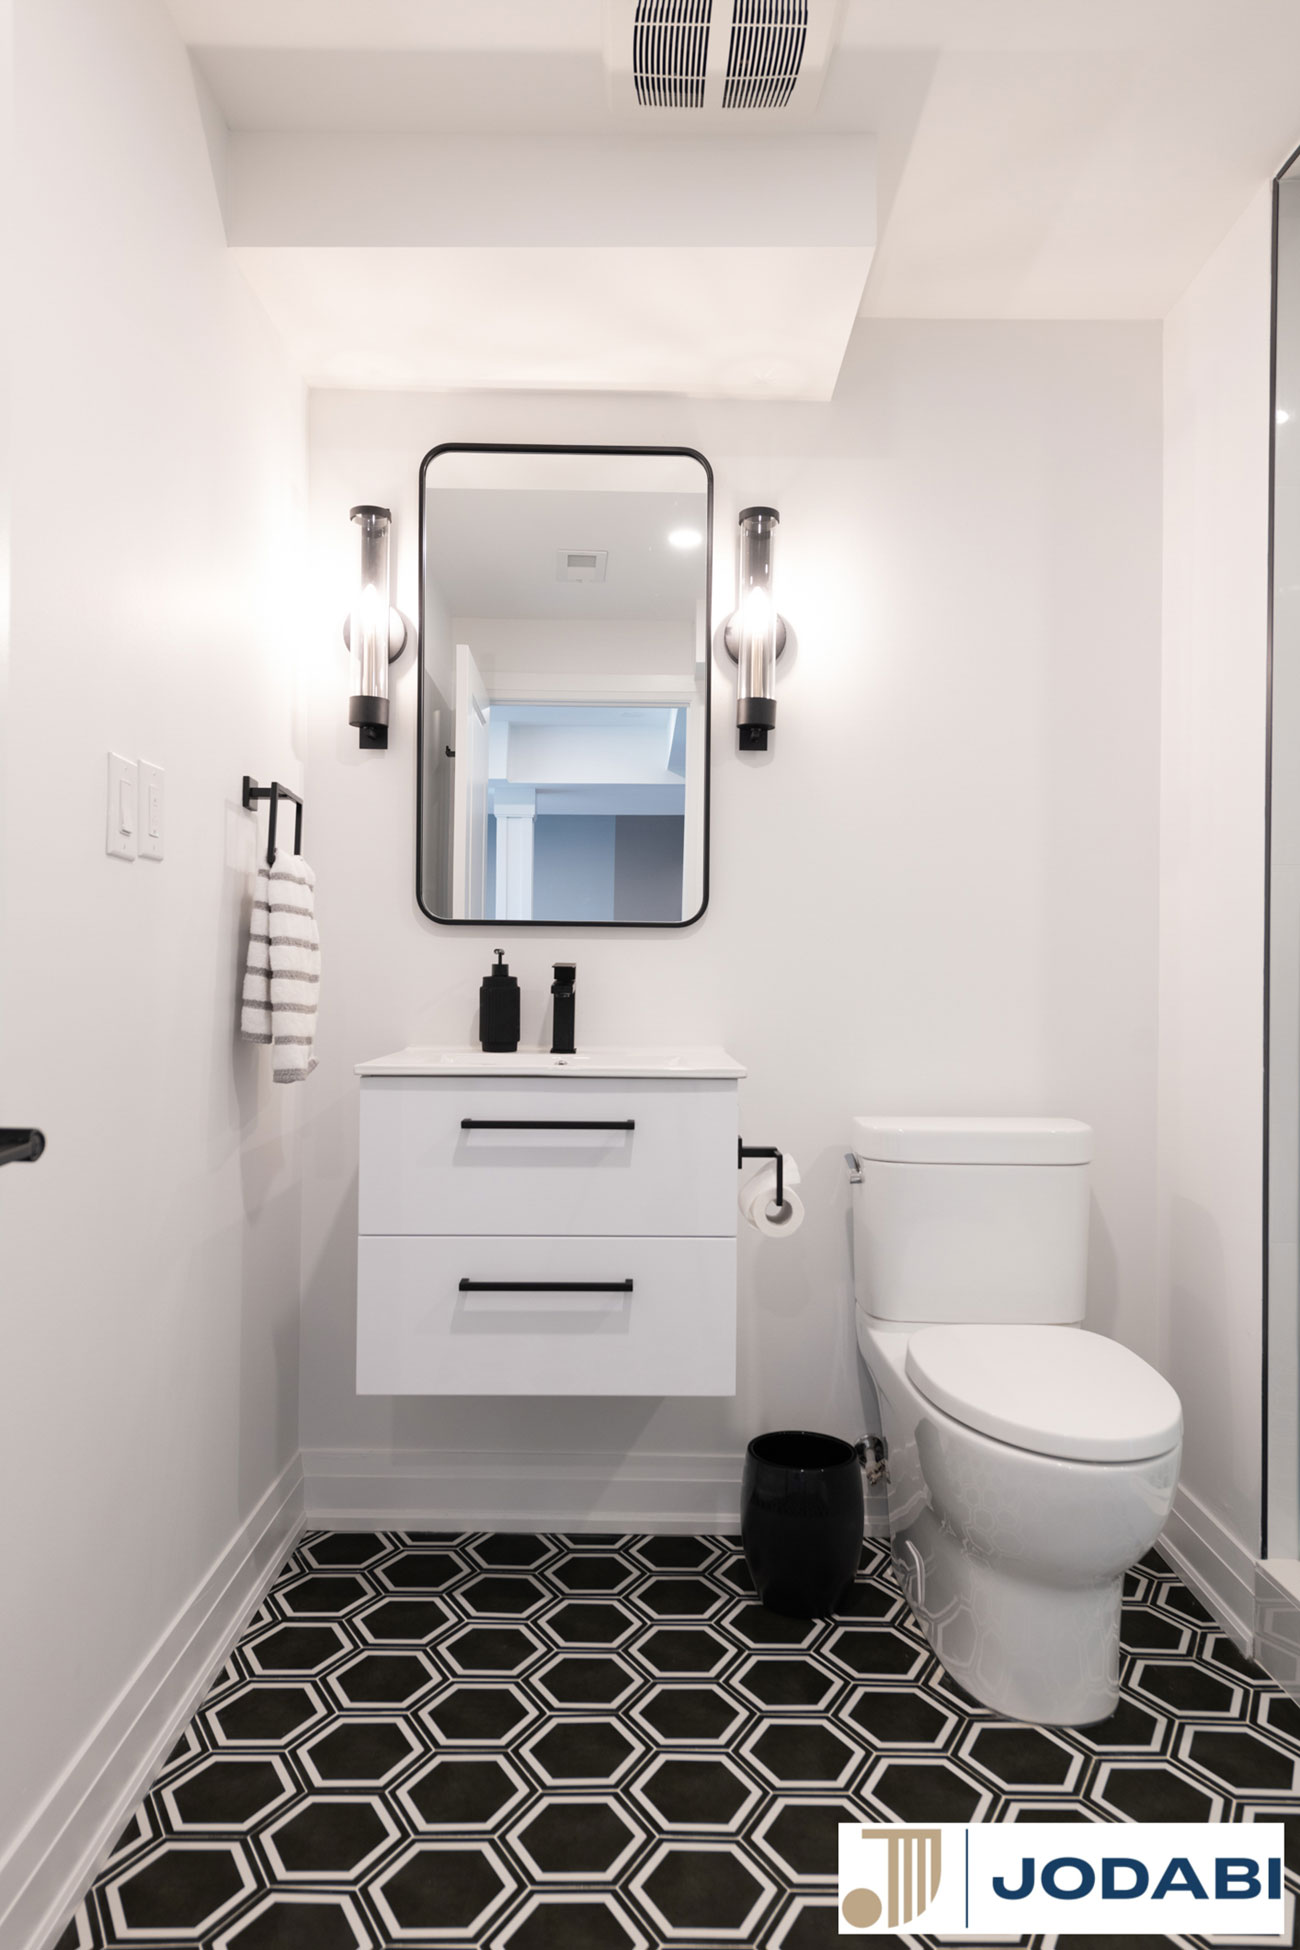 elite professional bathroom renovation service Toronto Contractor Project Argall